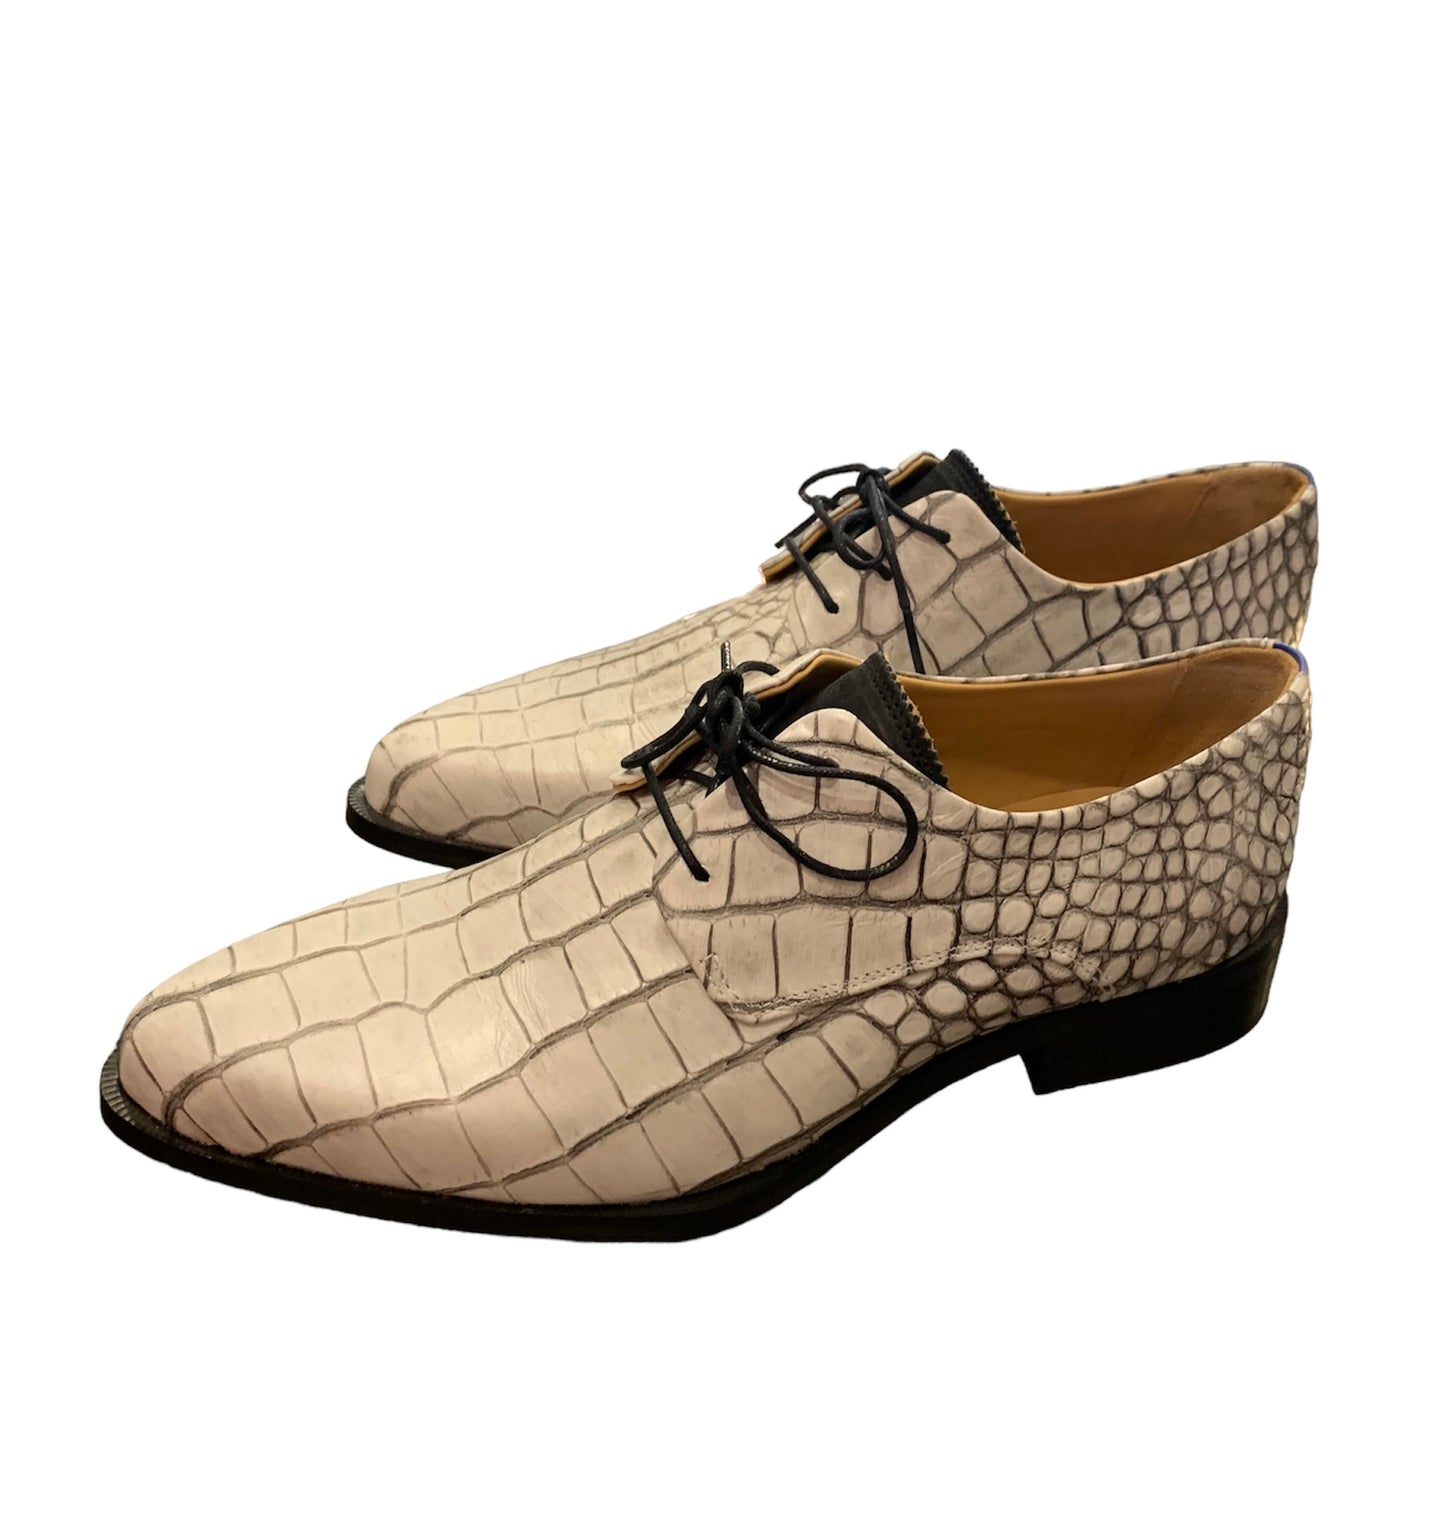 Modern Snakeskin Print Leather Loafers by John Fluevog NEED MEASUREMENTS